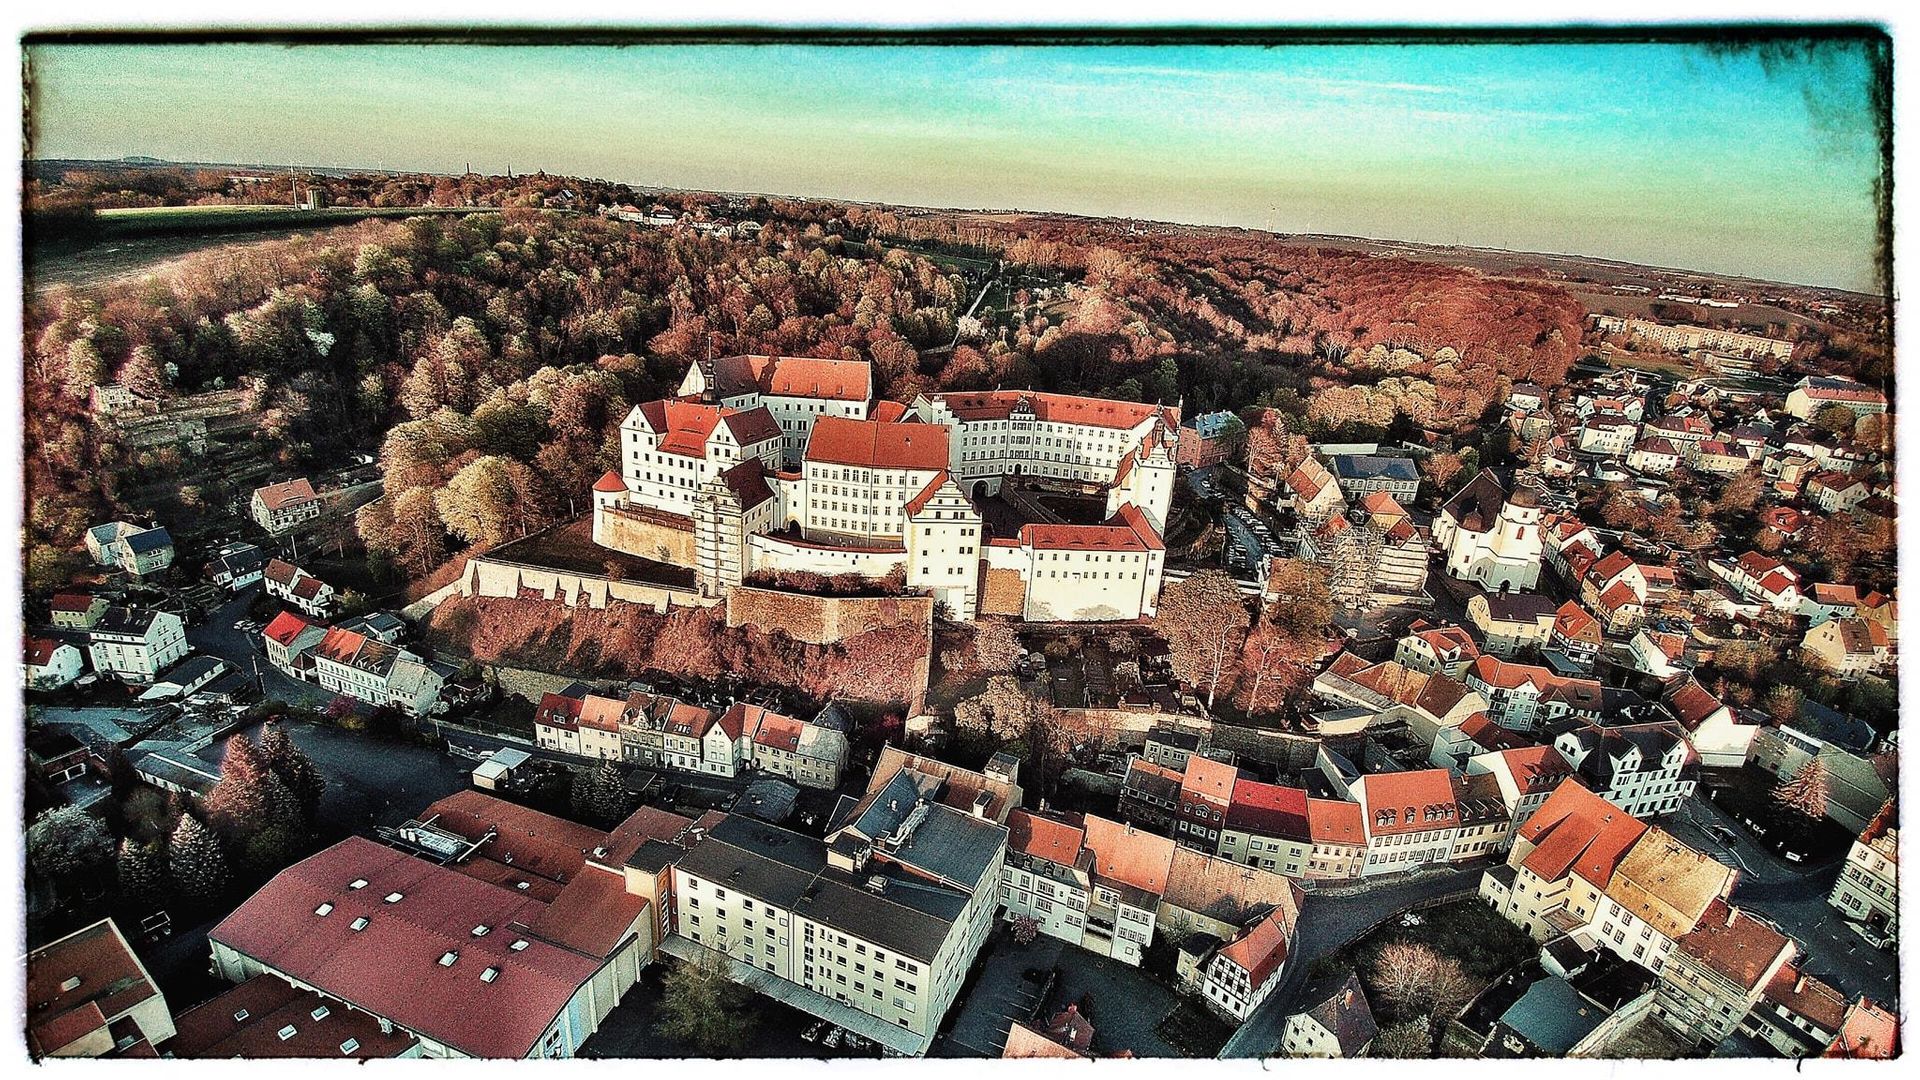 Anmelden | Stadt & Info Portal Colditz City